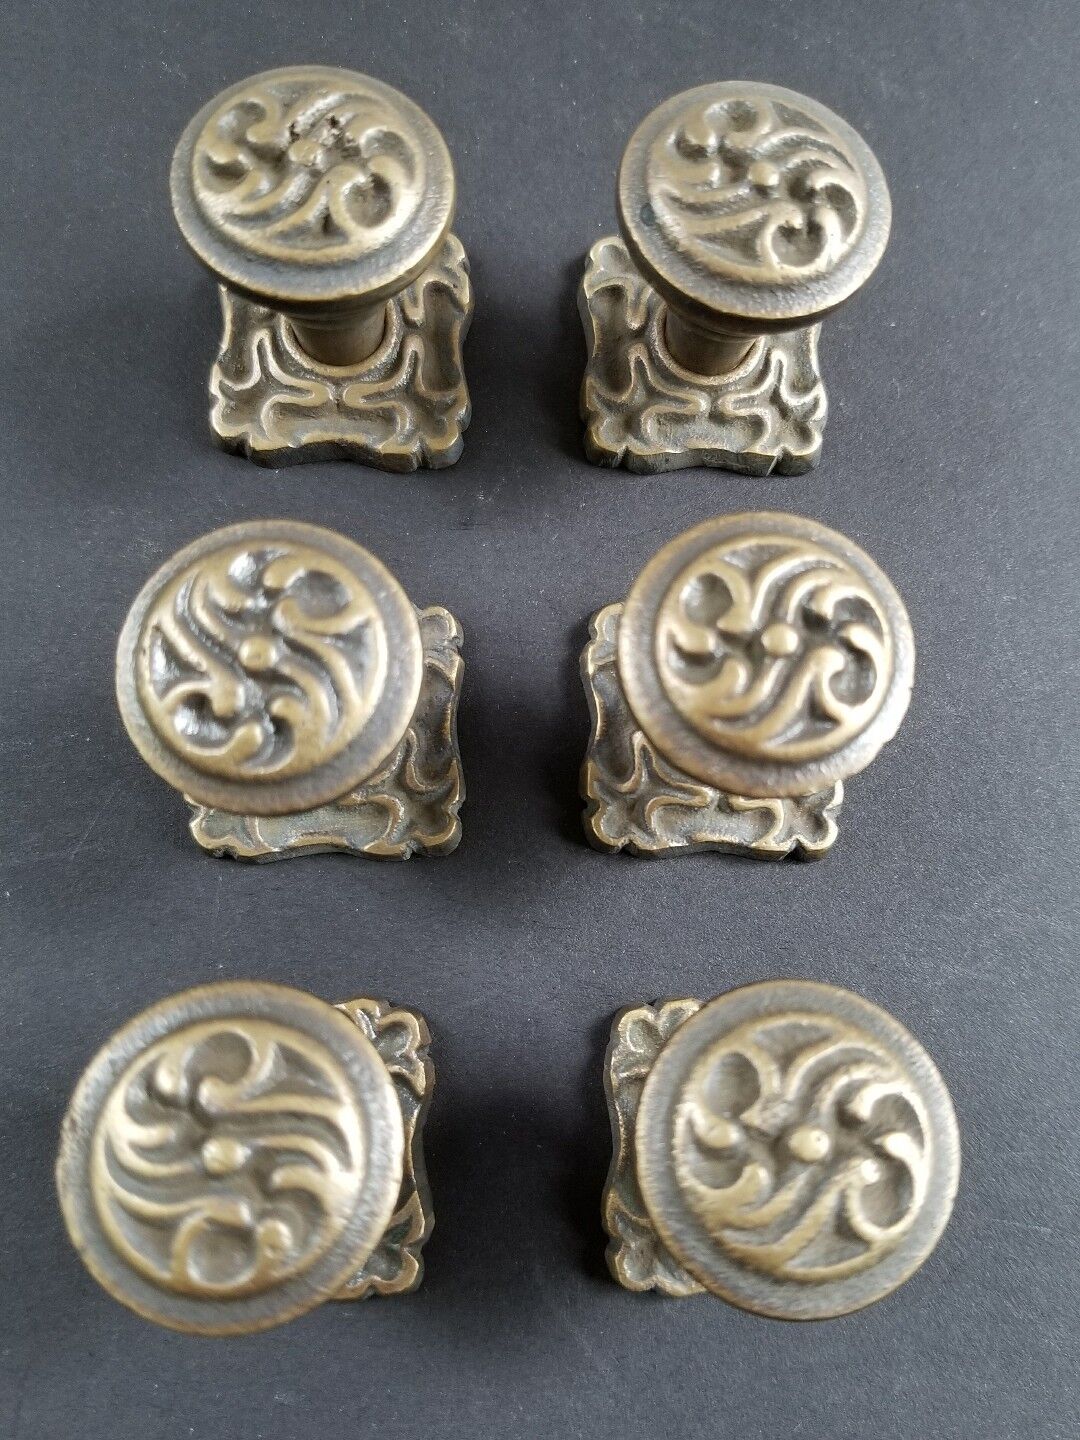 6 Ornate Art Nouveau Ornate Brass Knobs, Pulls hardware w. 1" back plate #K5